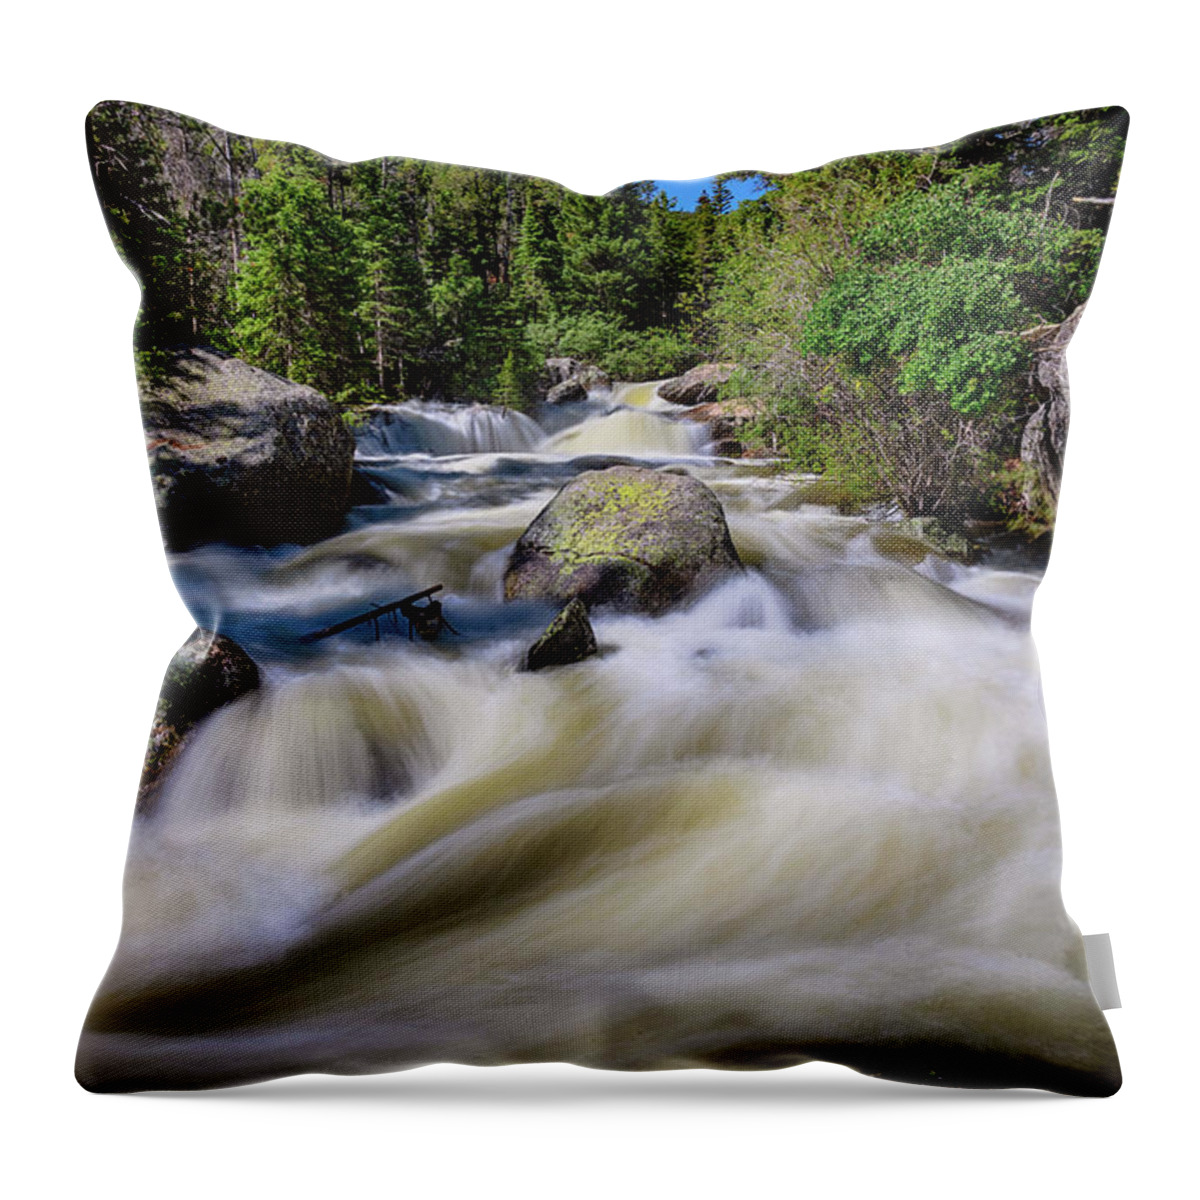 Colorado Throw Pillow featuring the photograph Roaring Colorado Ouzel Creek by James BO Insogna